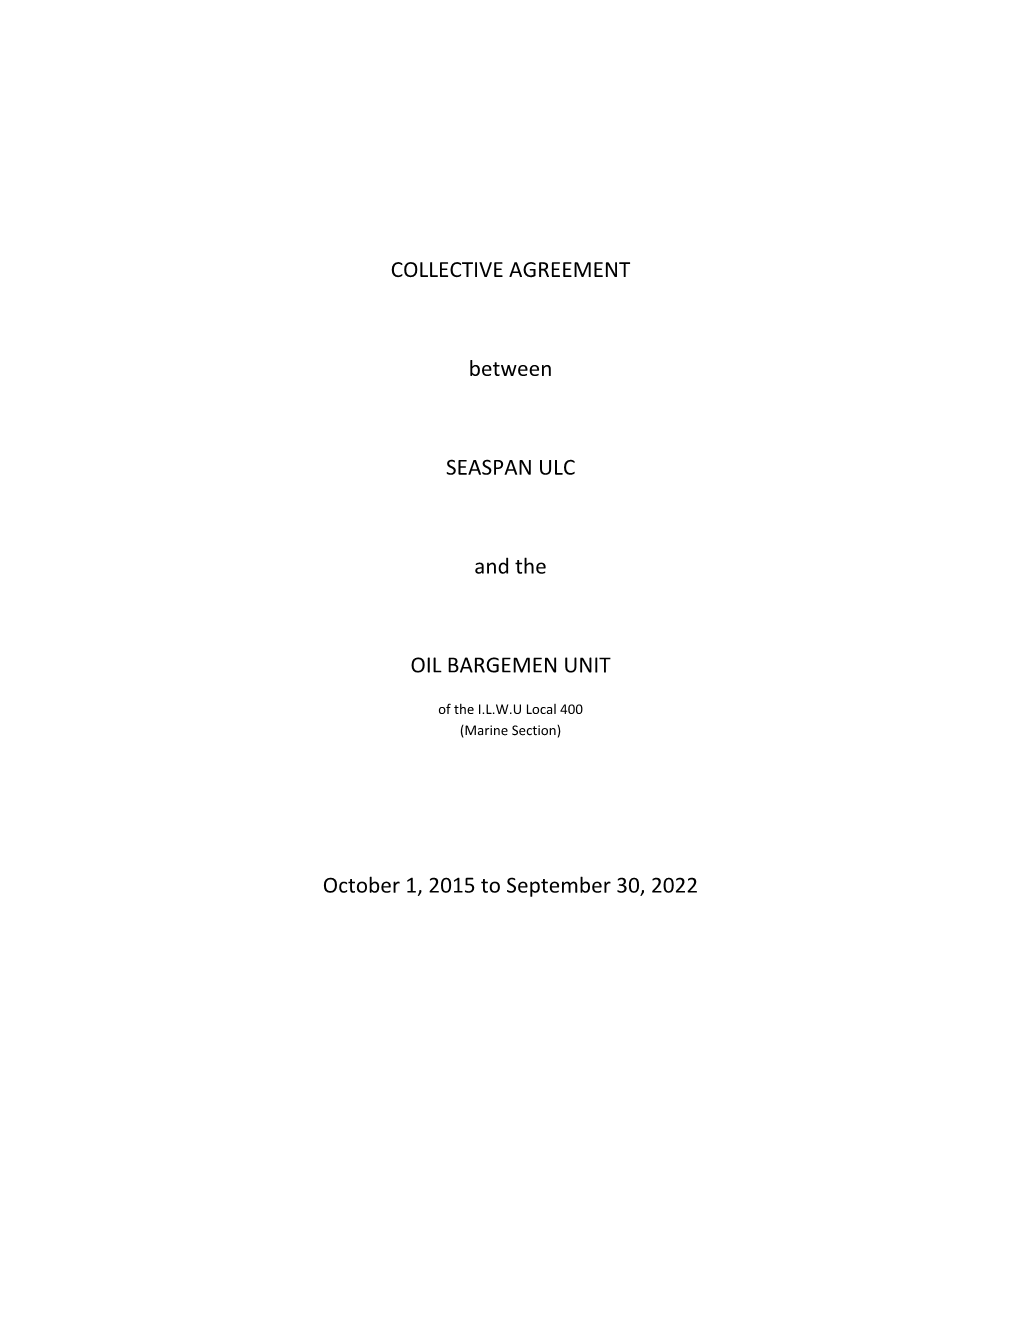 Seaspan ULC and ILWU Oil Bargmen Collective Agreement 2015-2022.Pdf